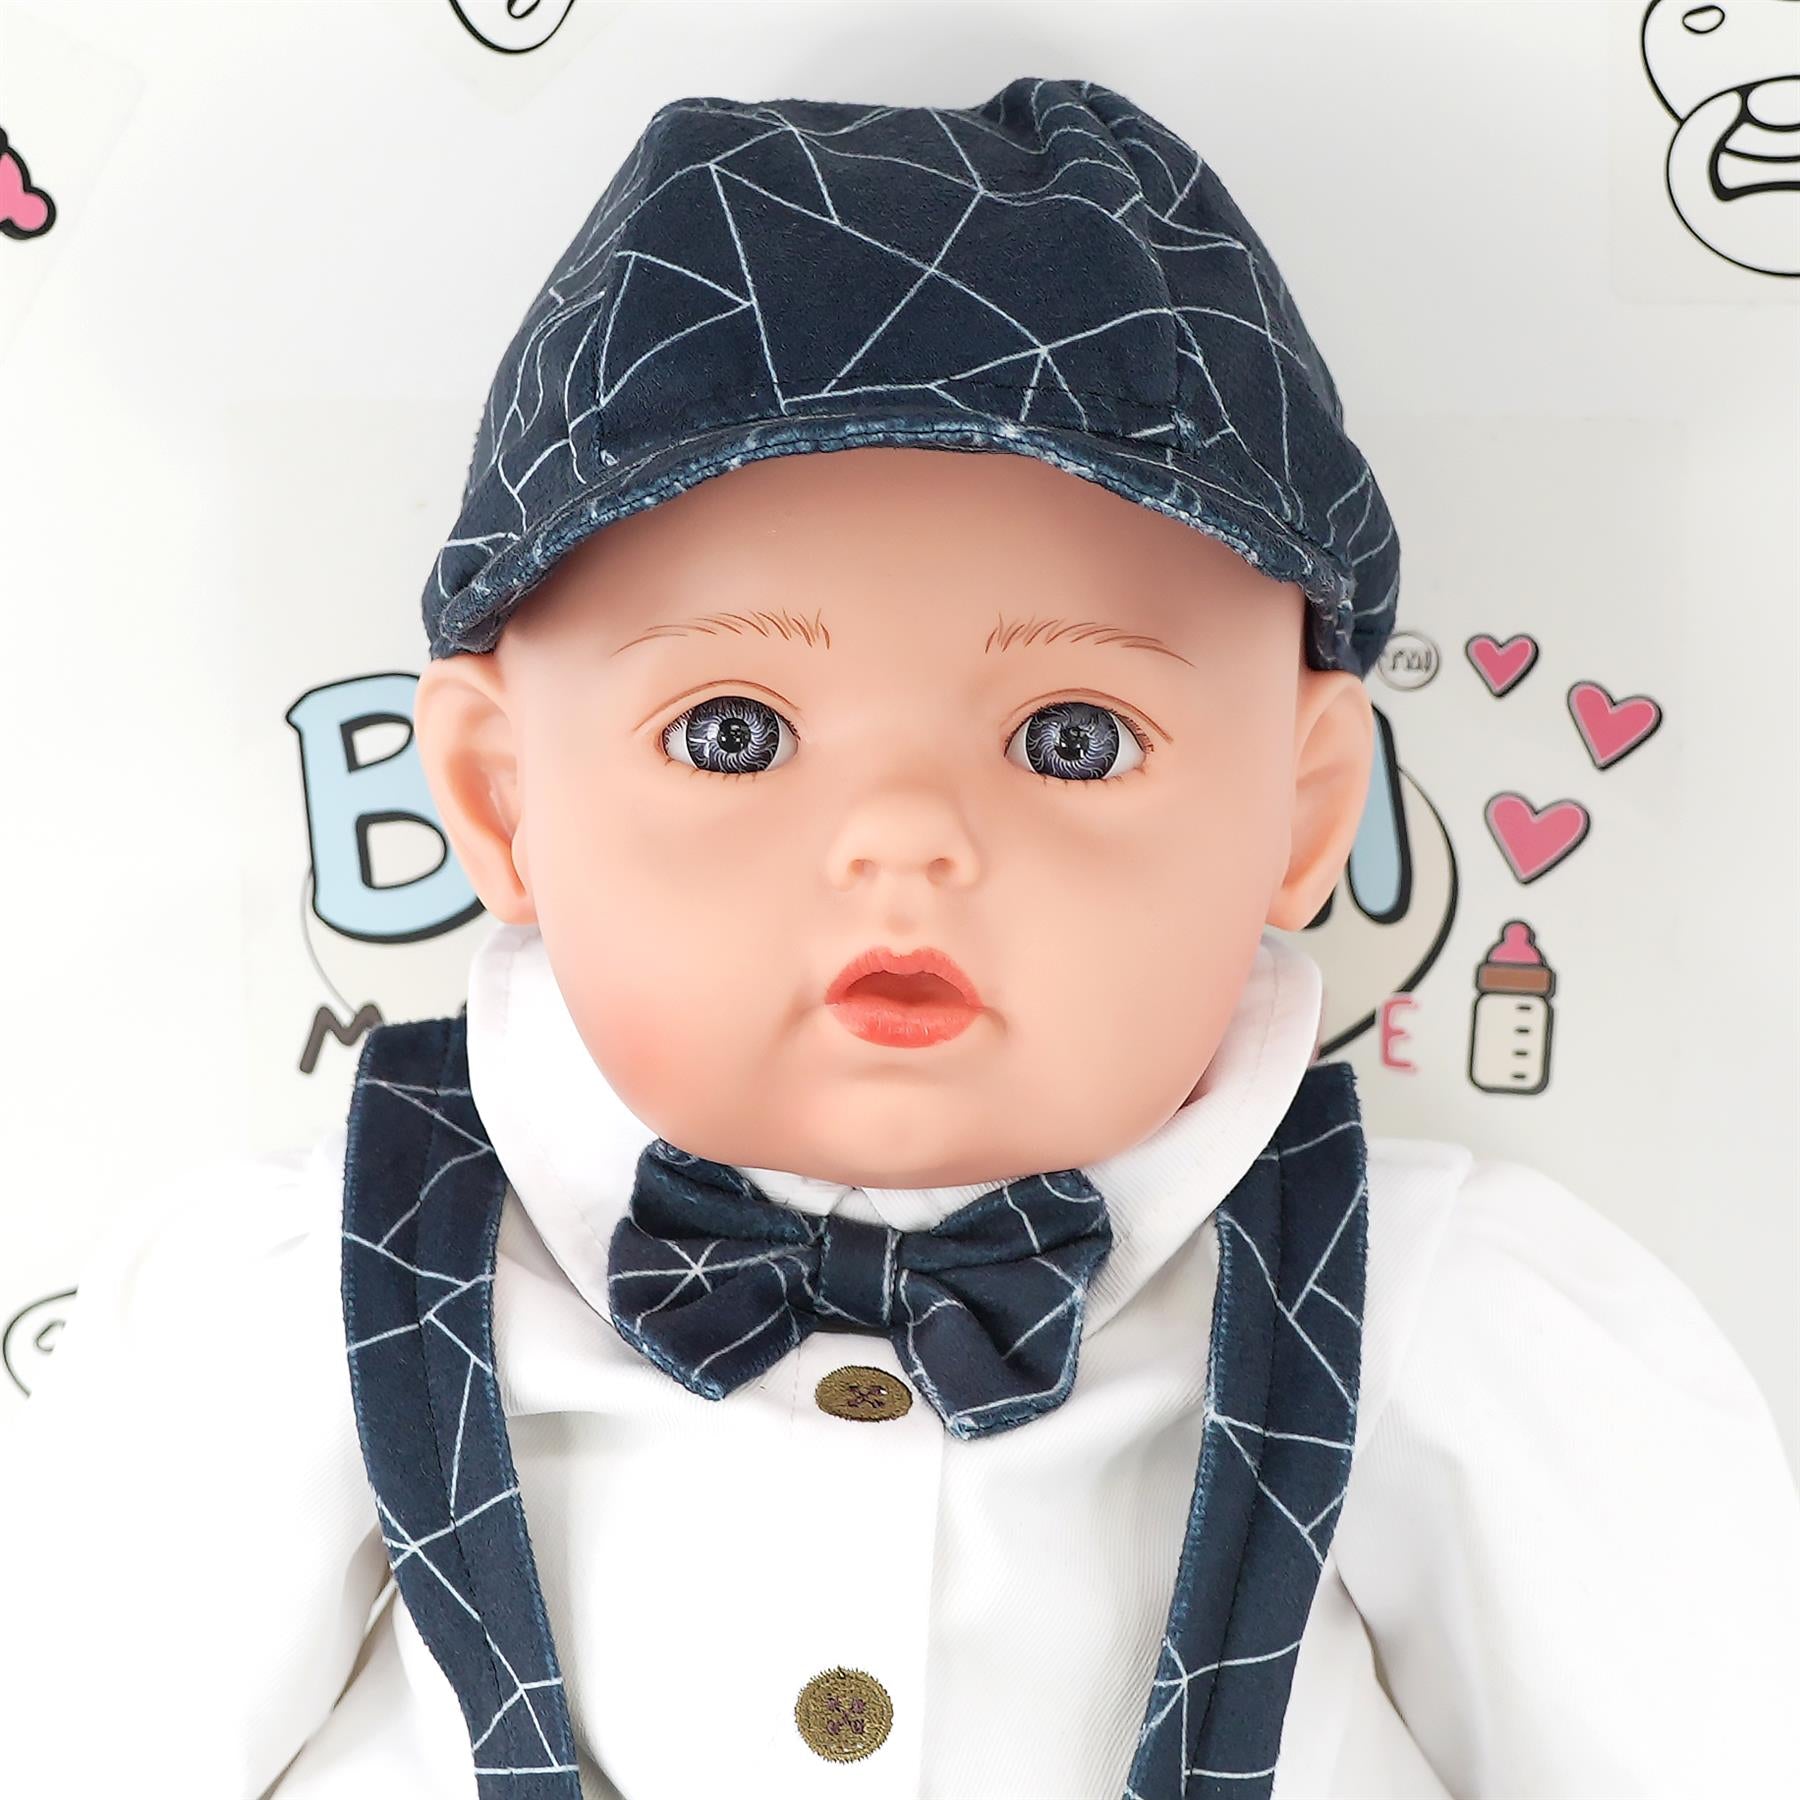 BiBi Baby Doll "Pebble" (50 cm / 20") by BiBi Doll - The Magic Toy Shop